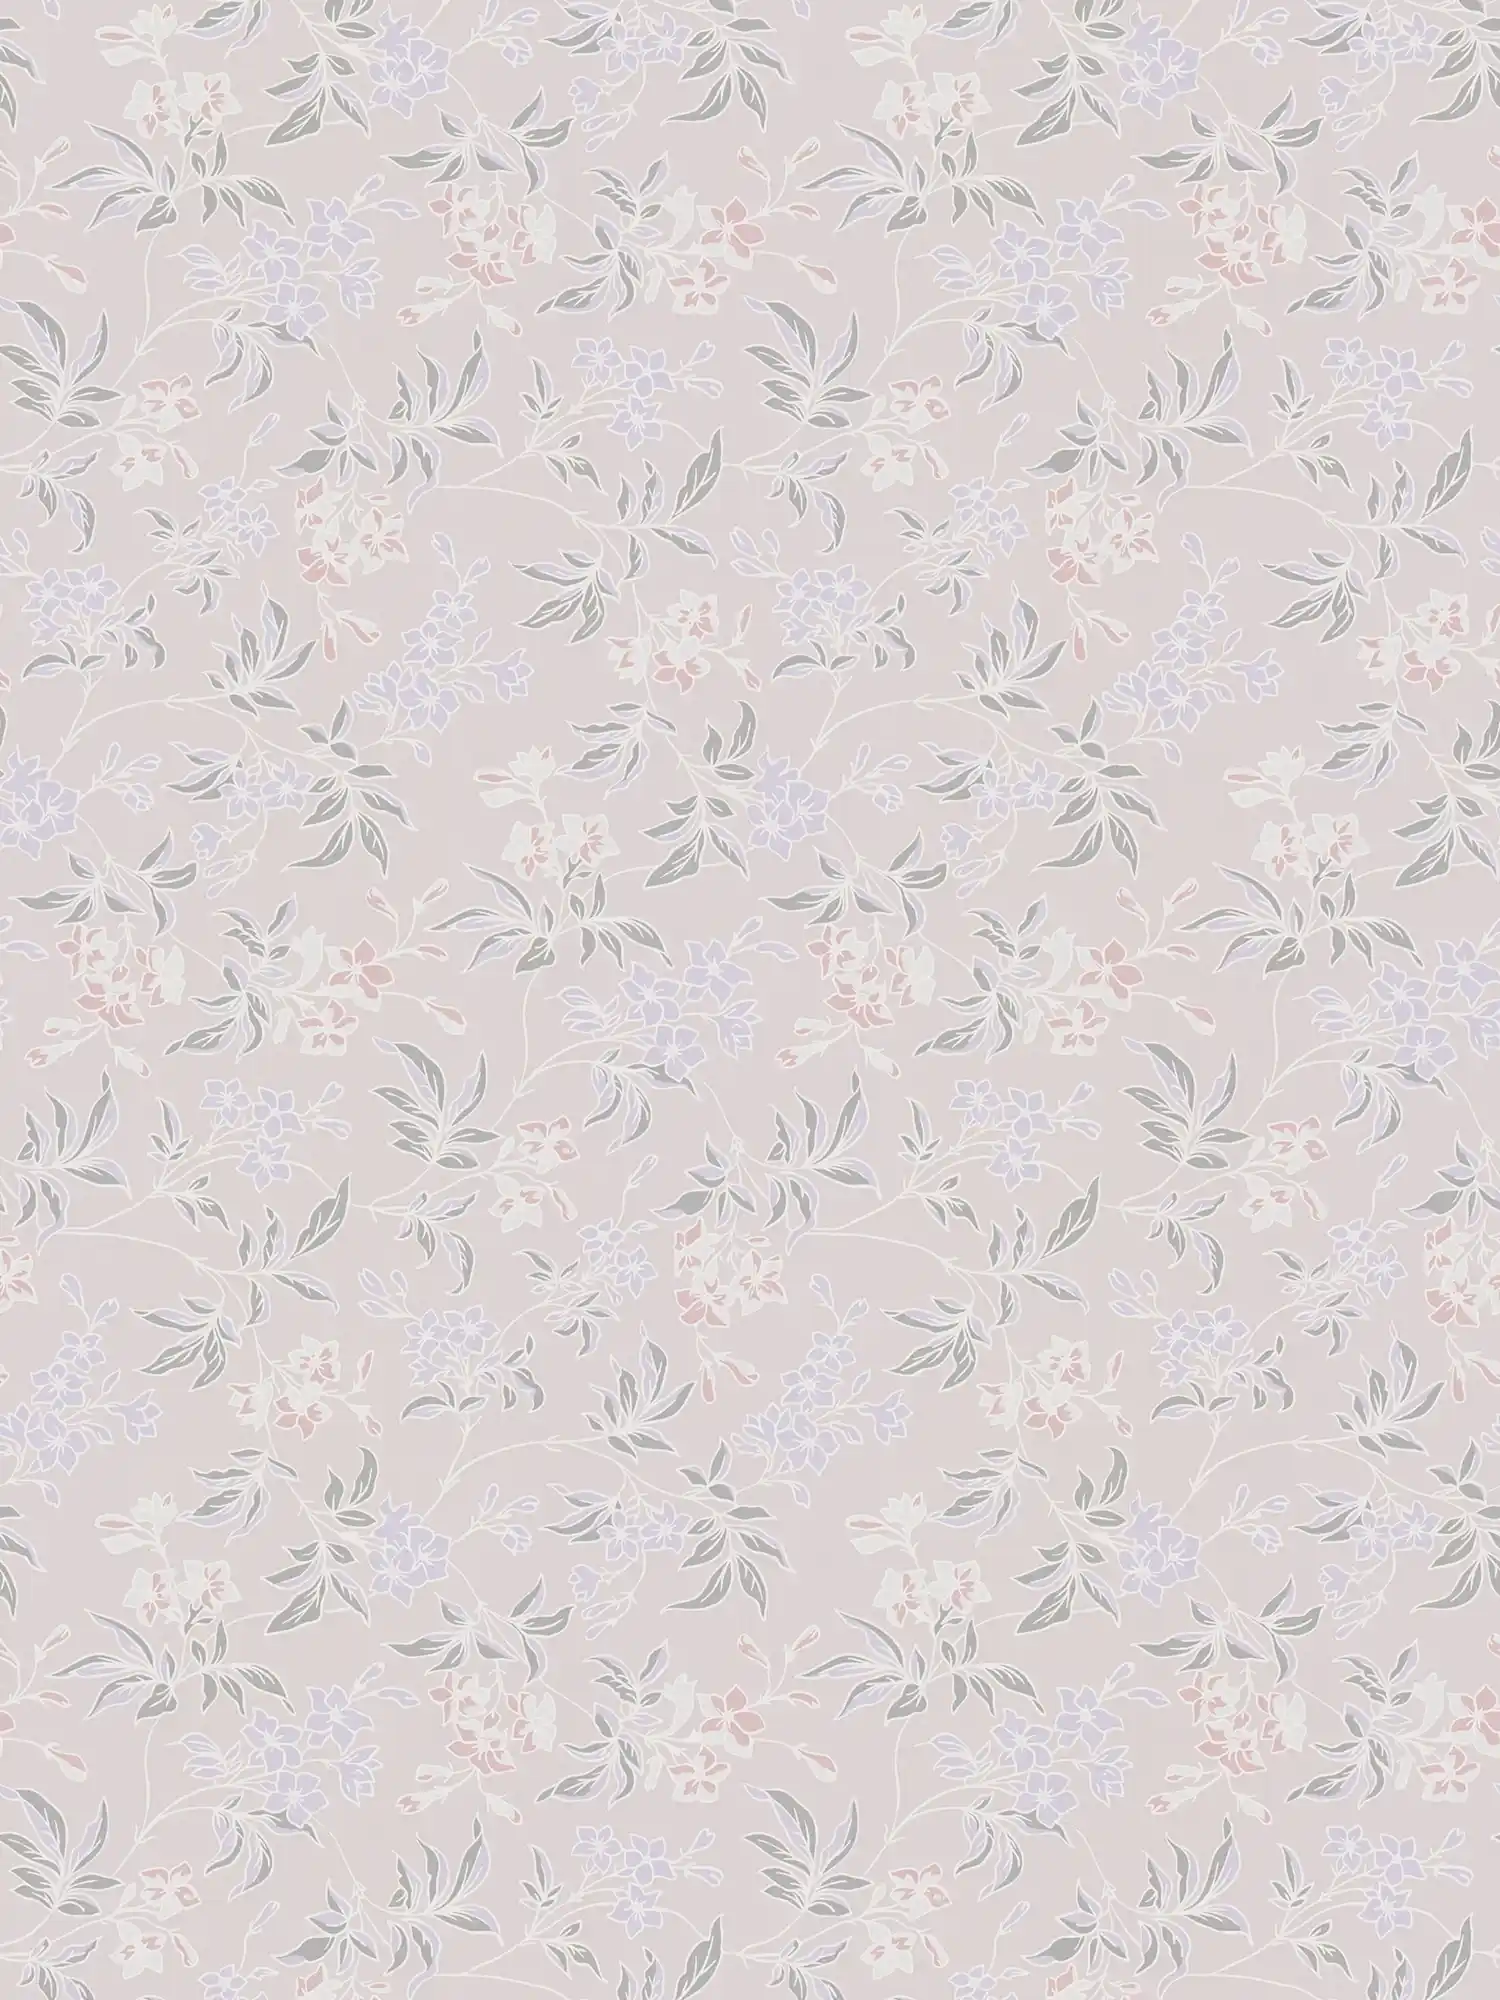 Engels vliesbehang met bloemenmotief - crème, roze, paars
